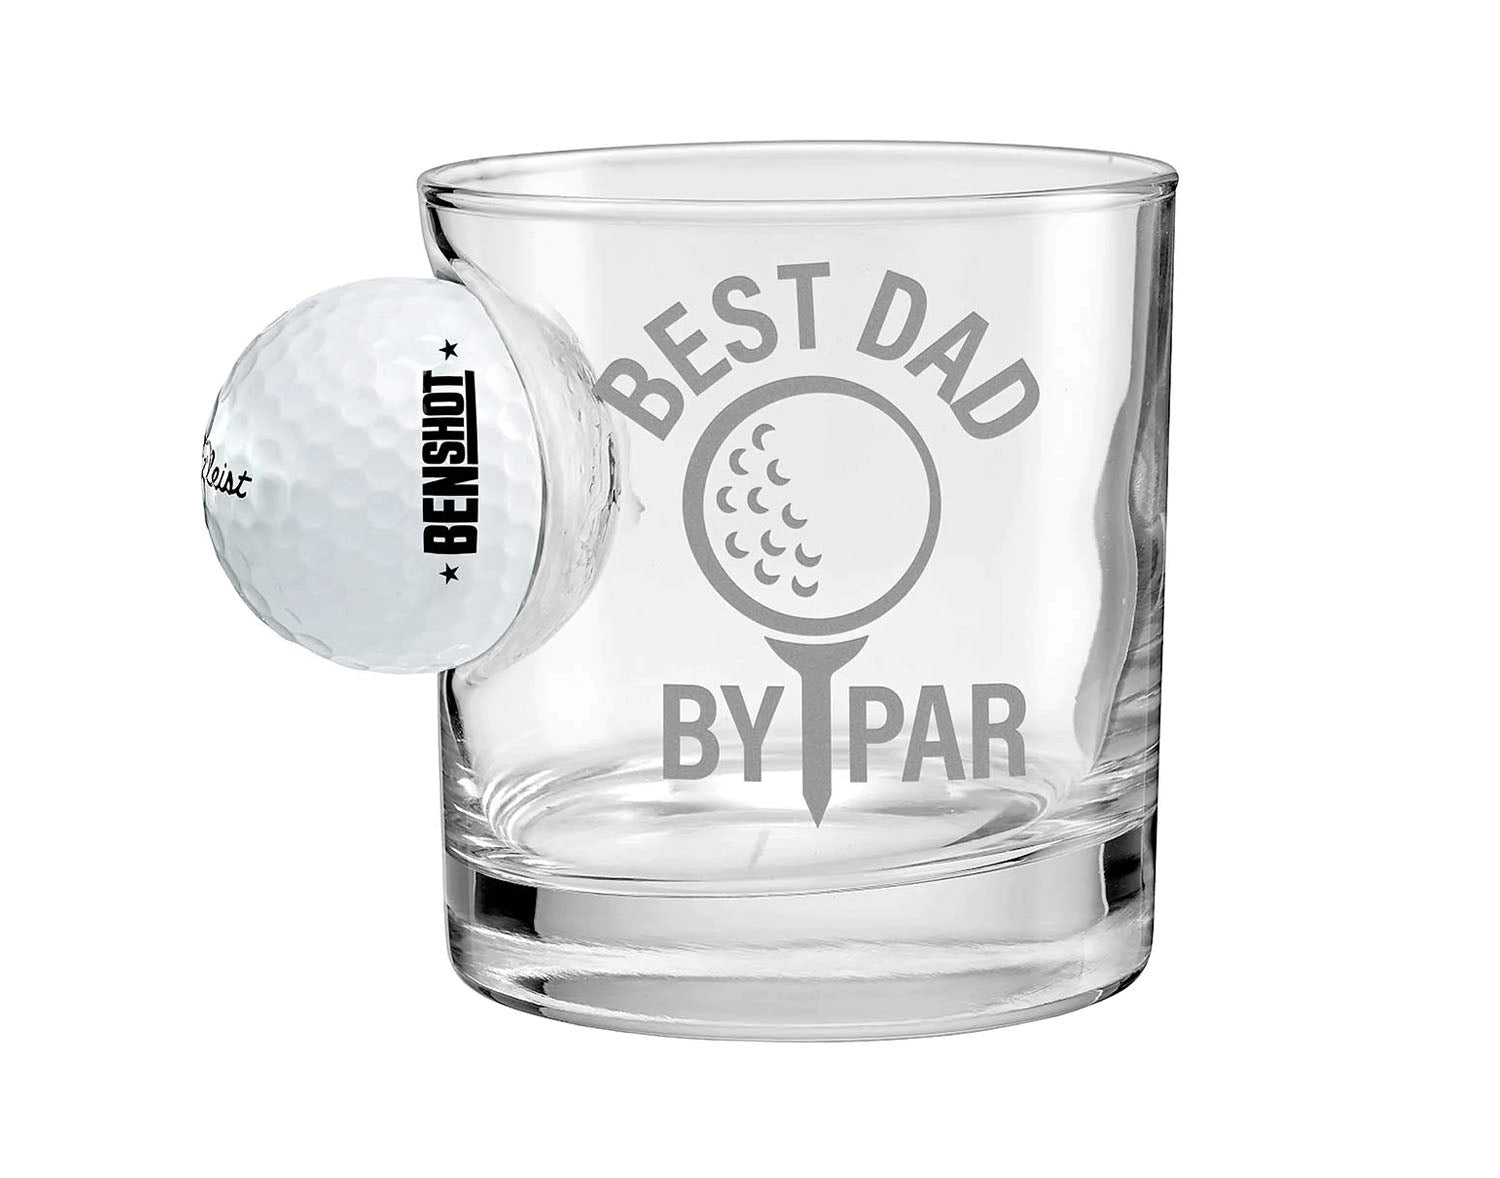 Best Day By Par Golf Ball Rocks Glass